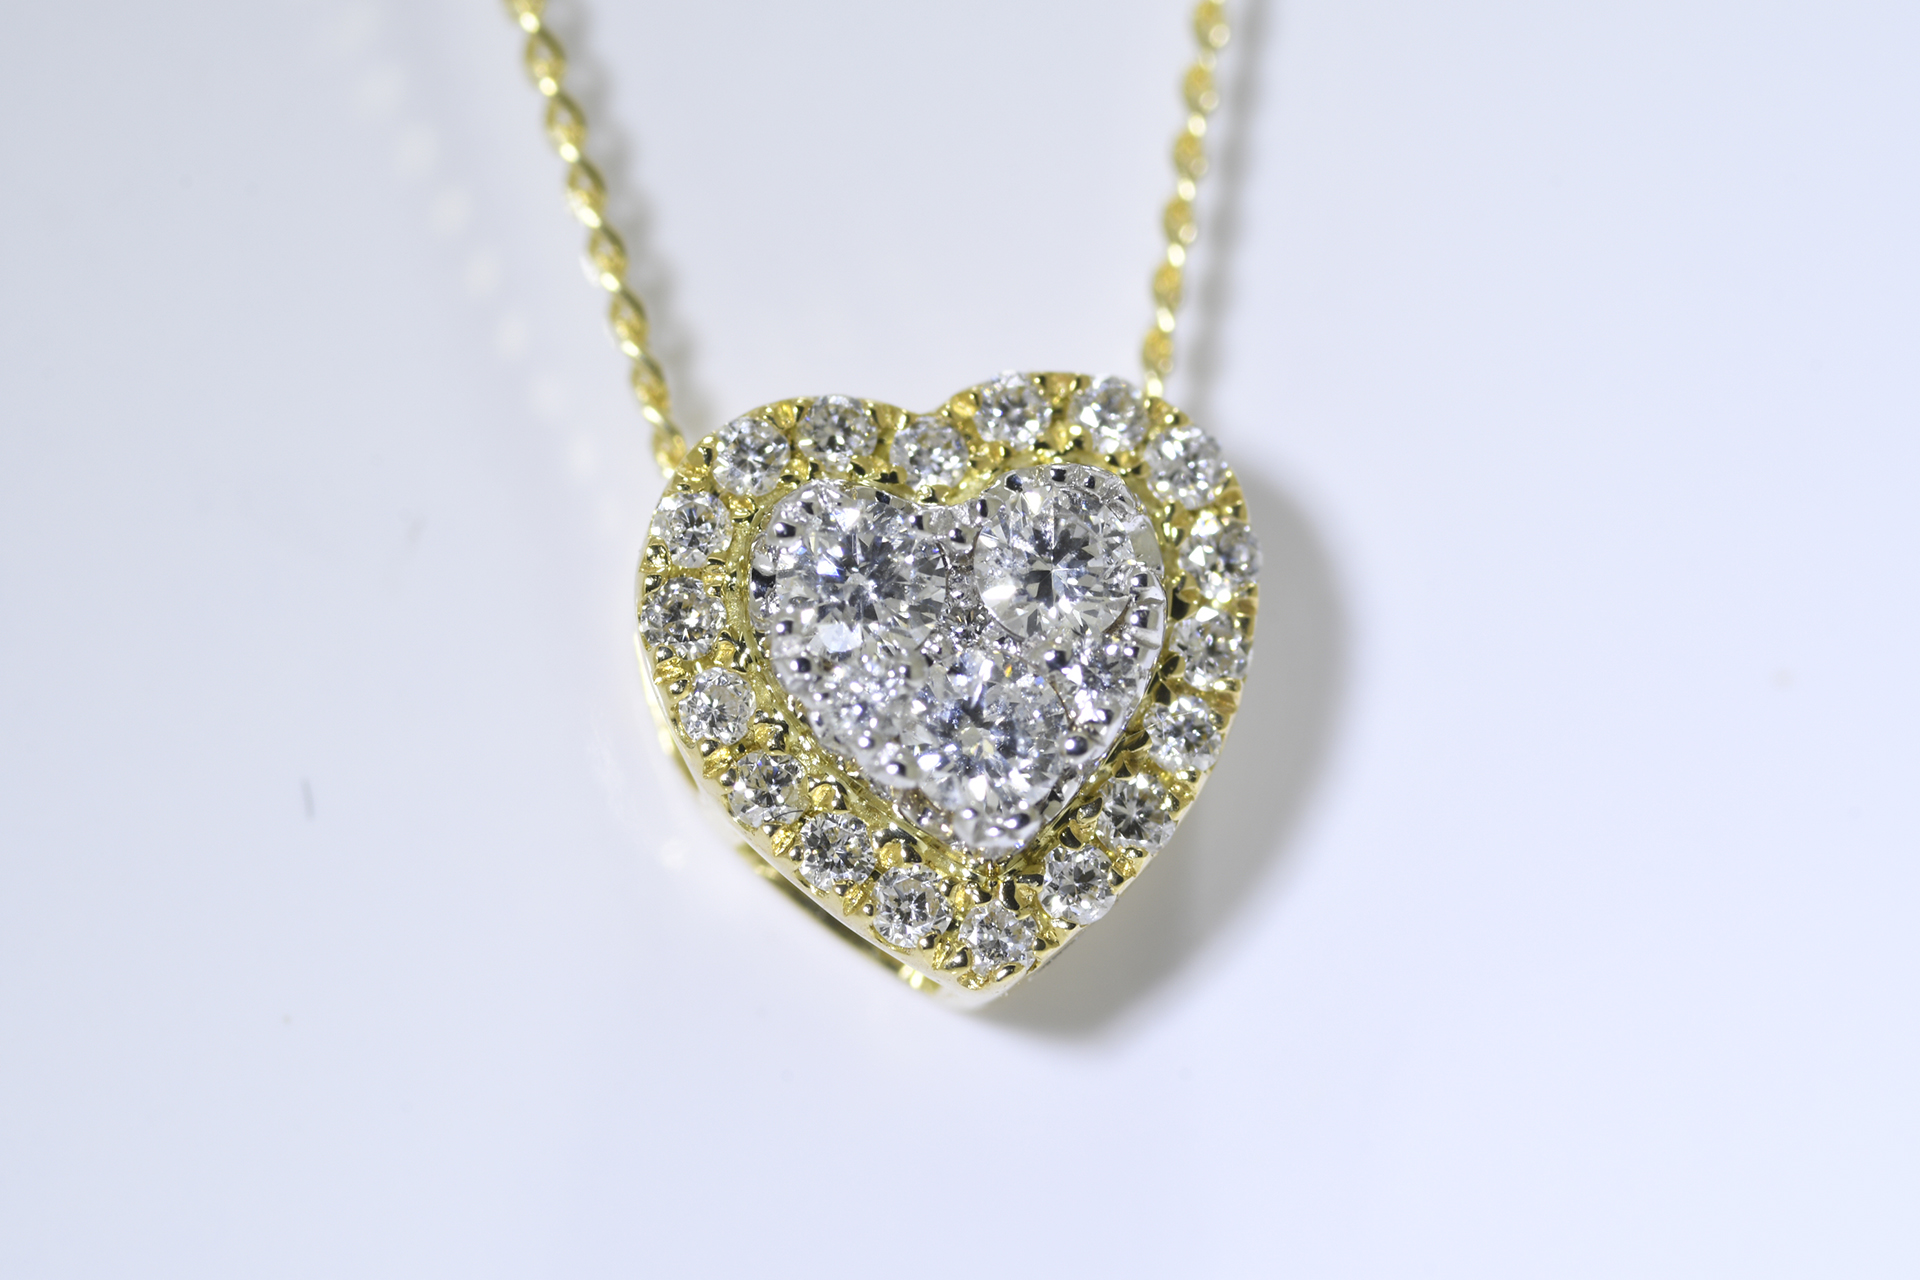 Heart Shaped Diamond Pendant in 18 carat Gold